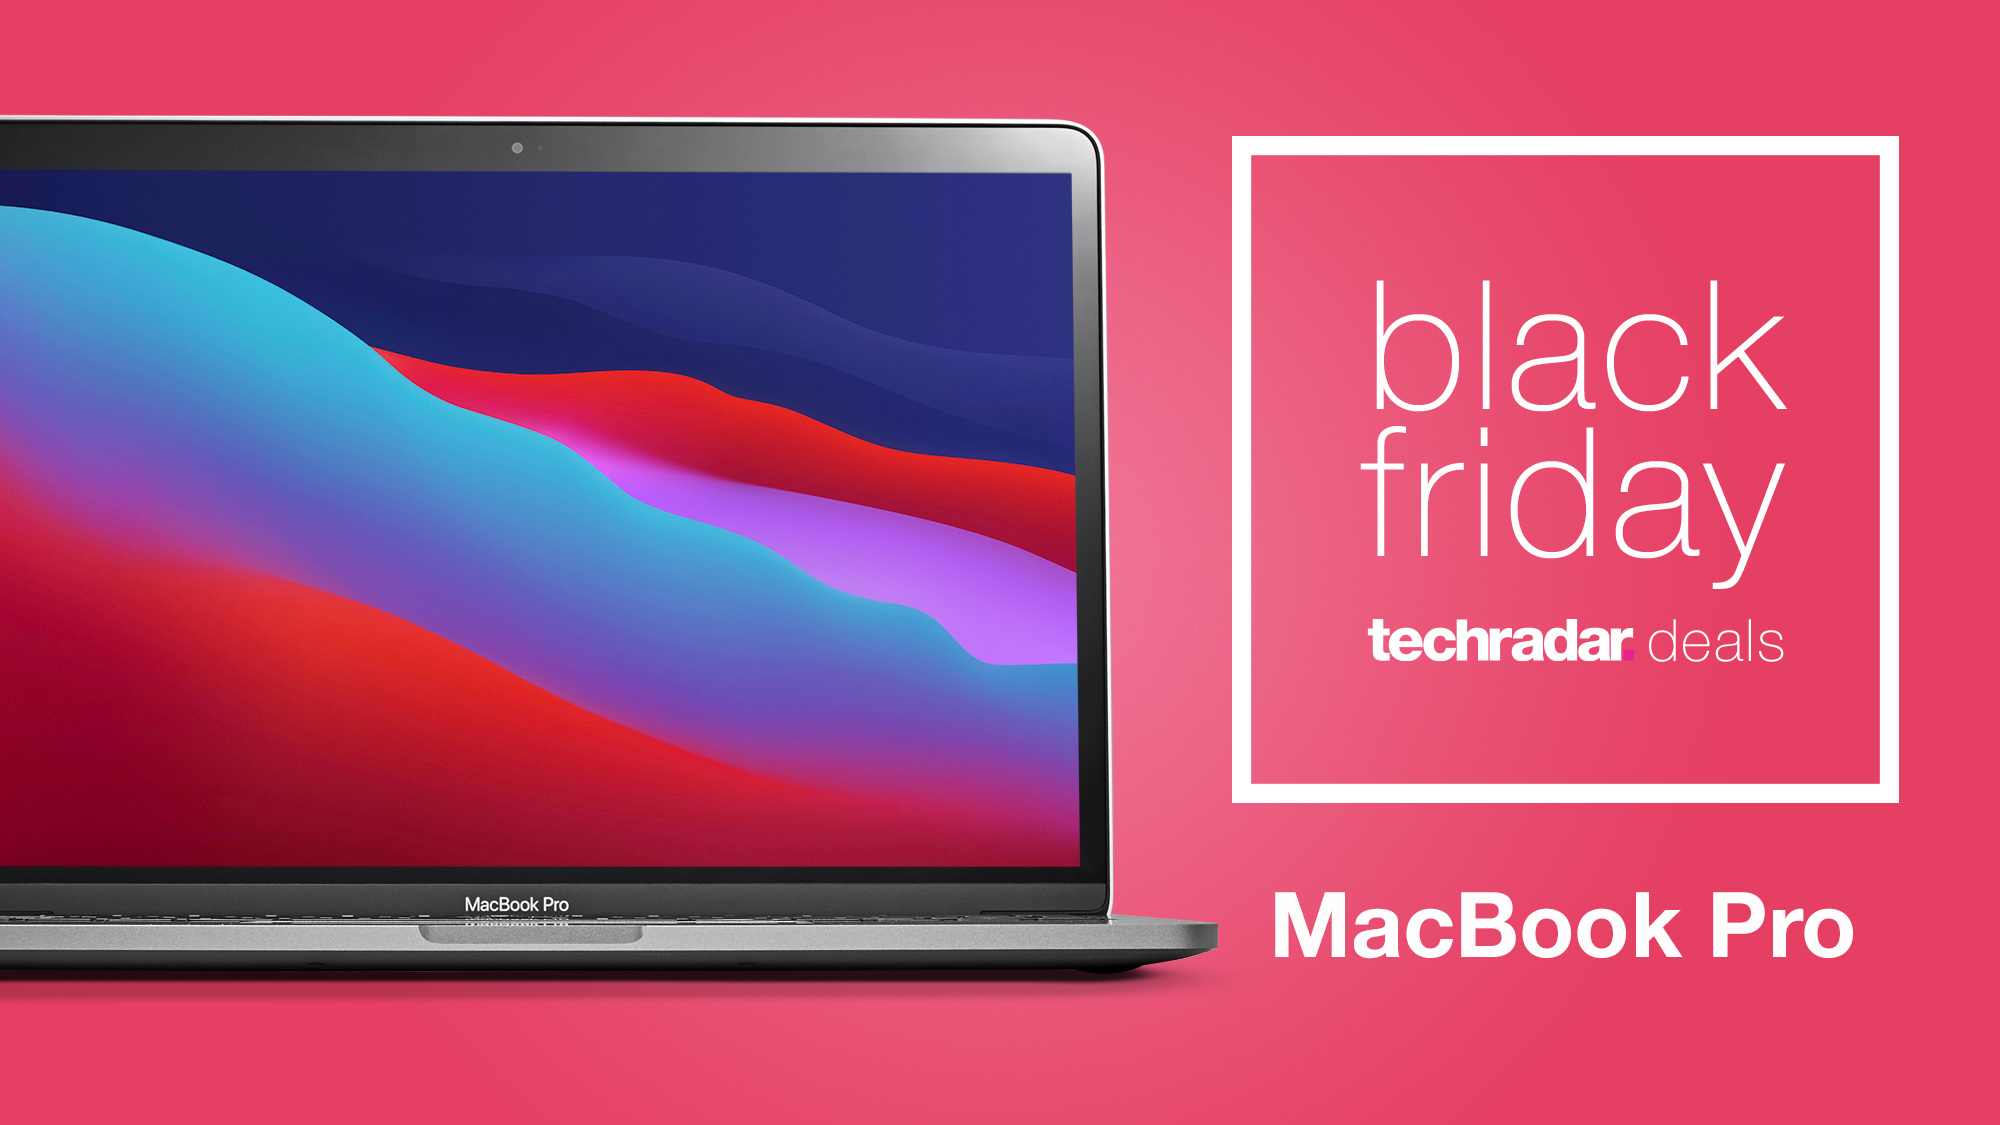 13 inch macbook pro with retina display black friday deals idle c